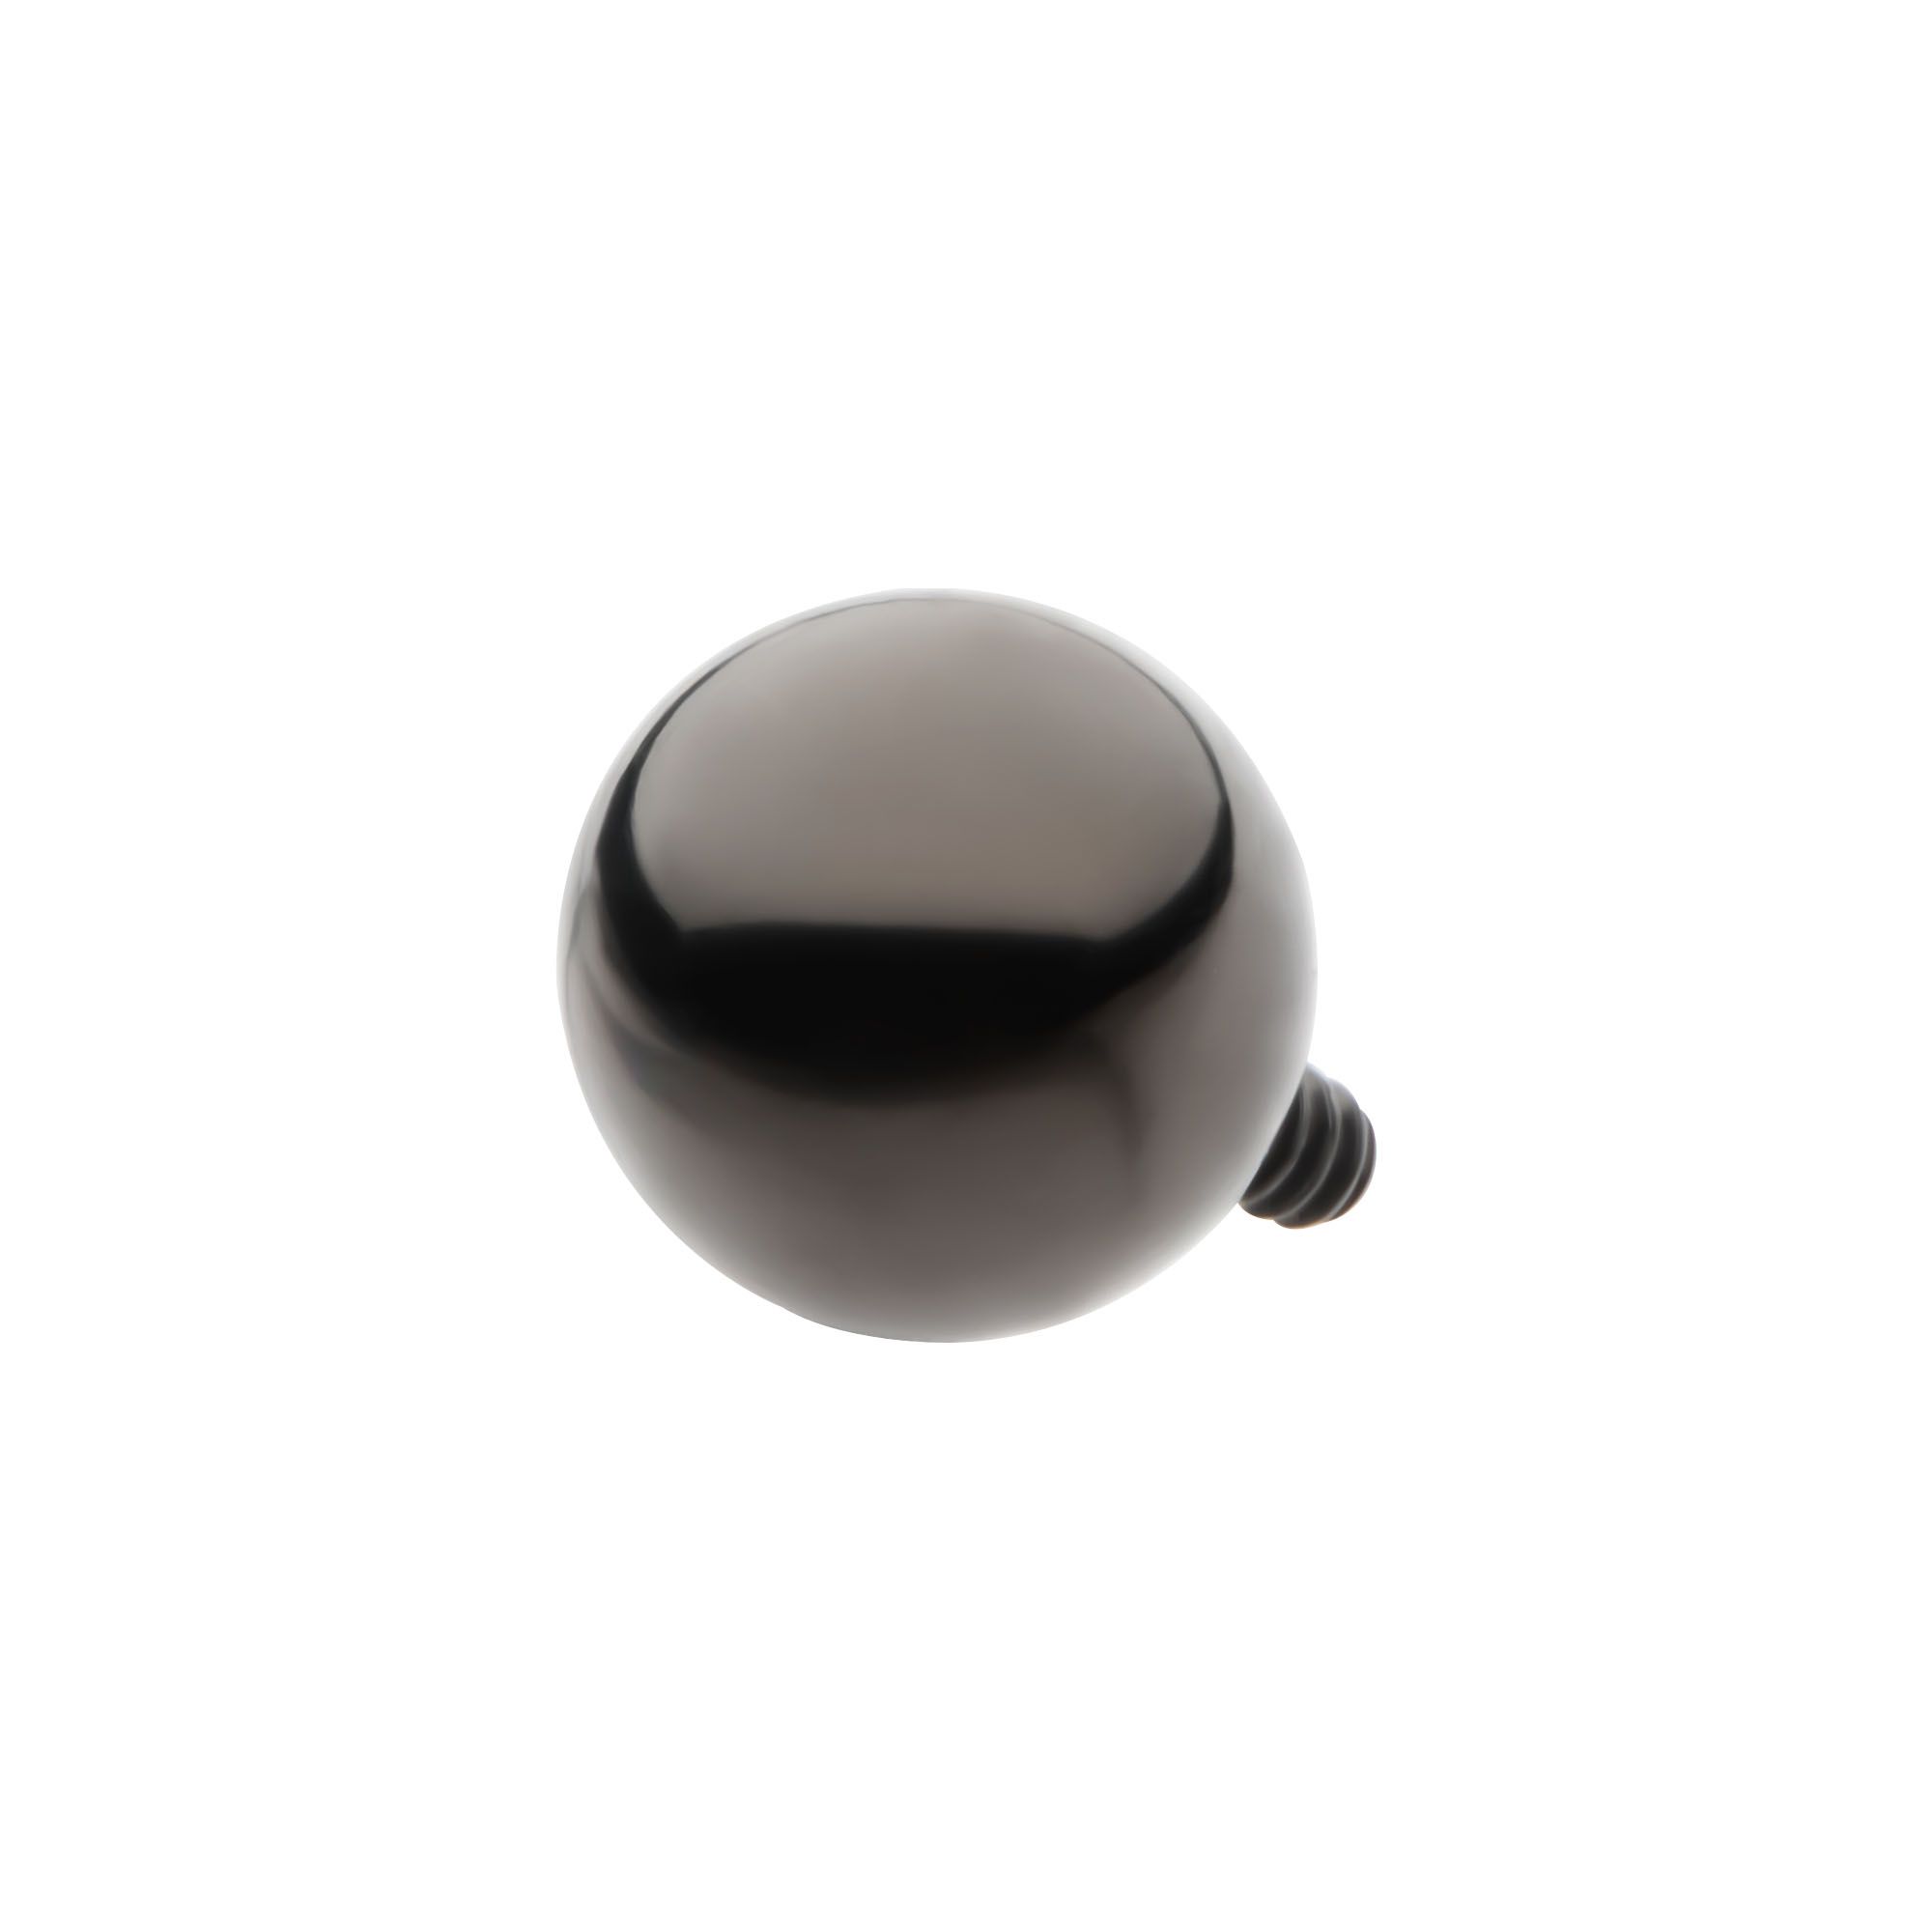 Black PVD Titanium Internally Threaded Ball Top tiball641k -Rebel Bod-RebelBod